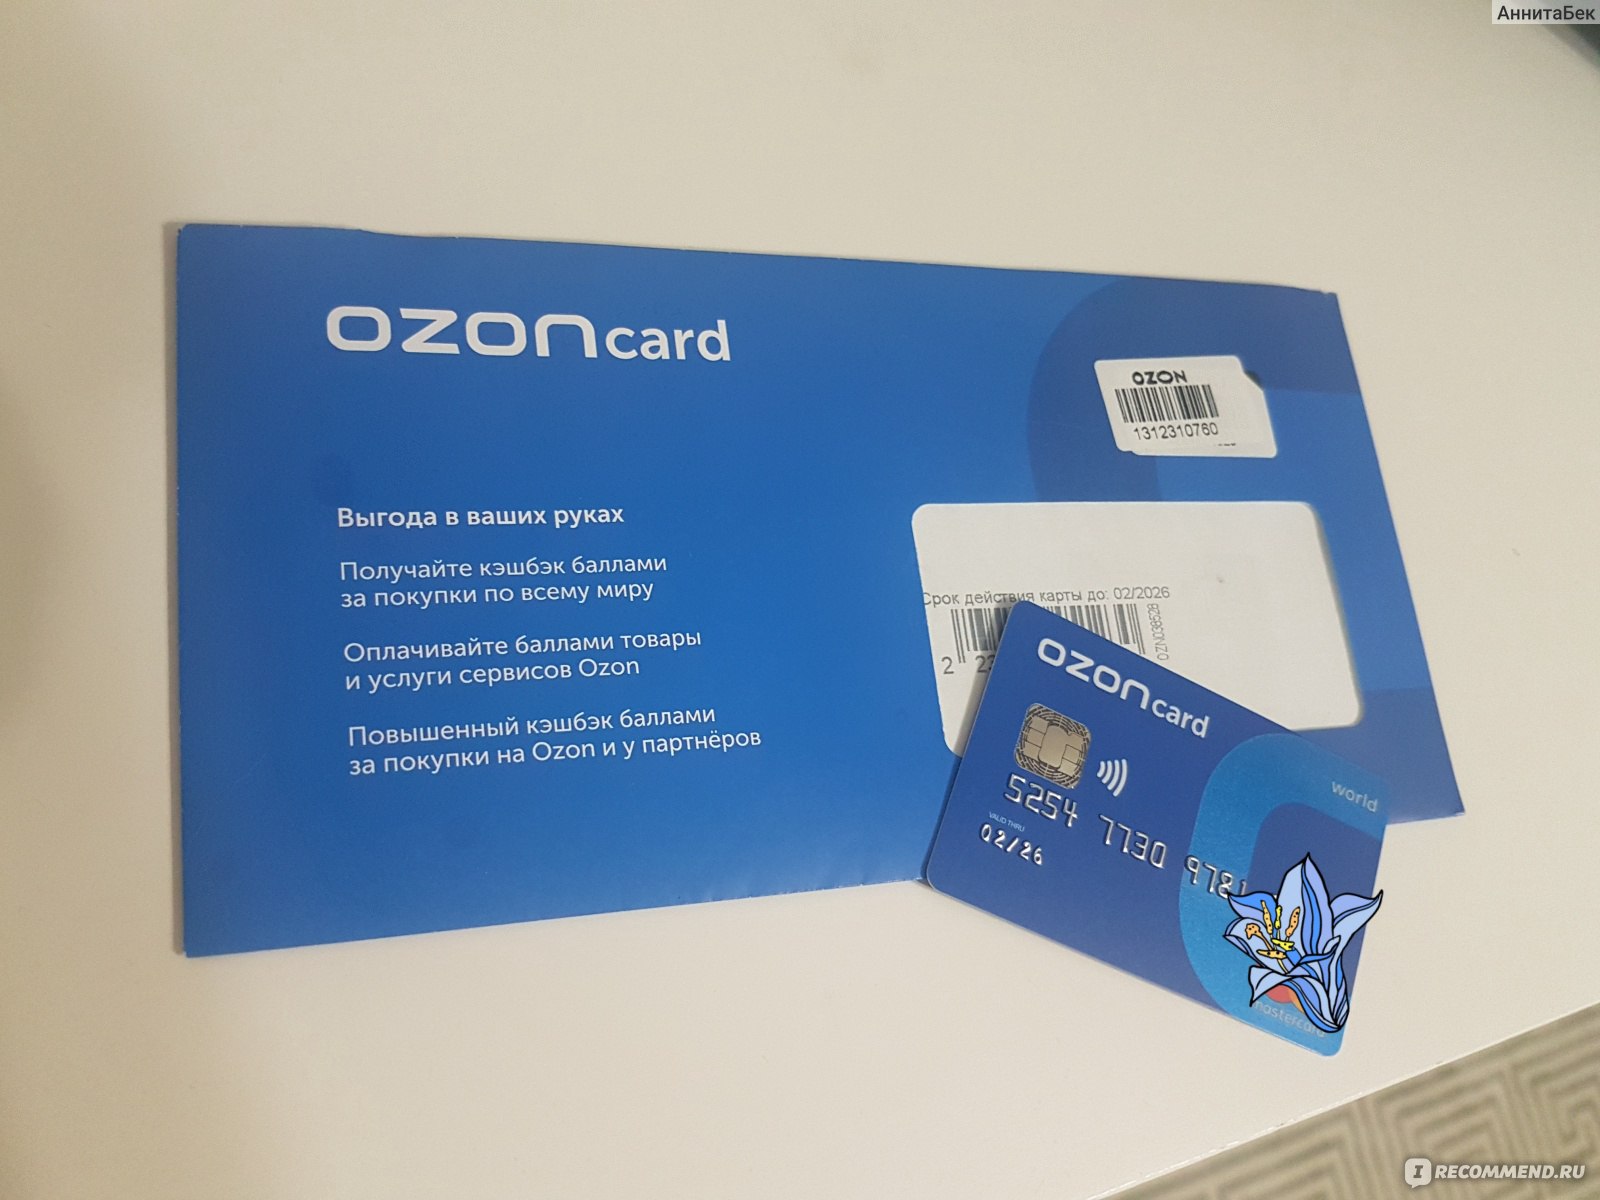 Оплата картой банк озон. OZON карта. Карточки OZON. Озон картд. Банковская карта Озон.